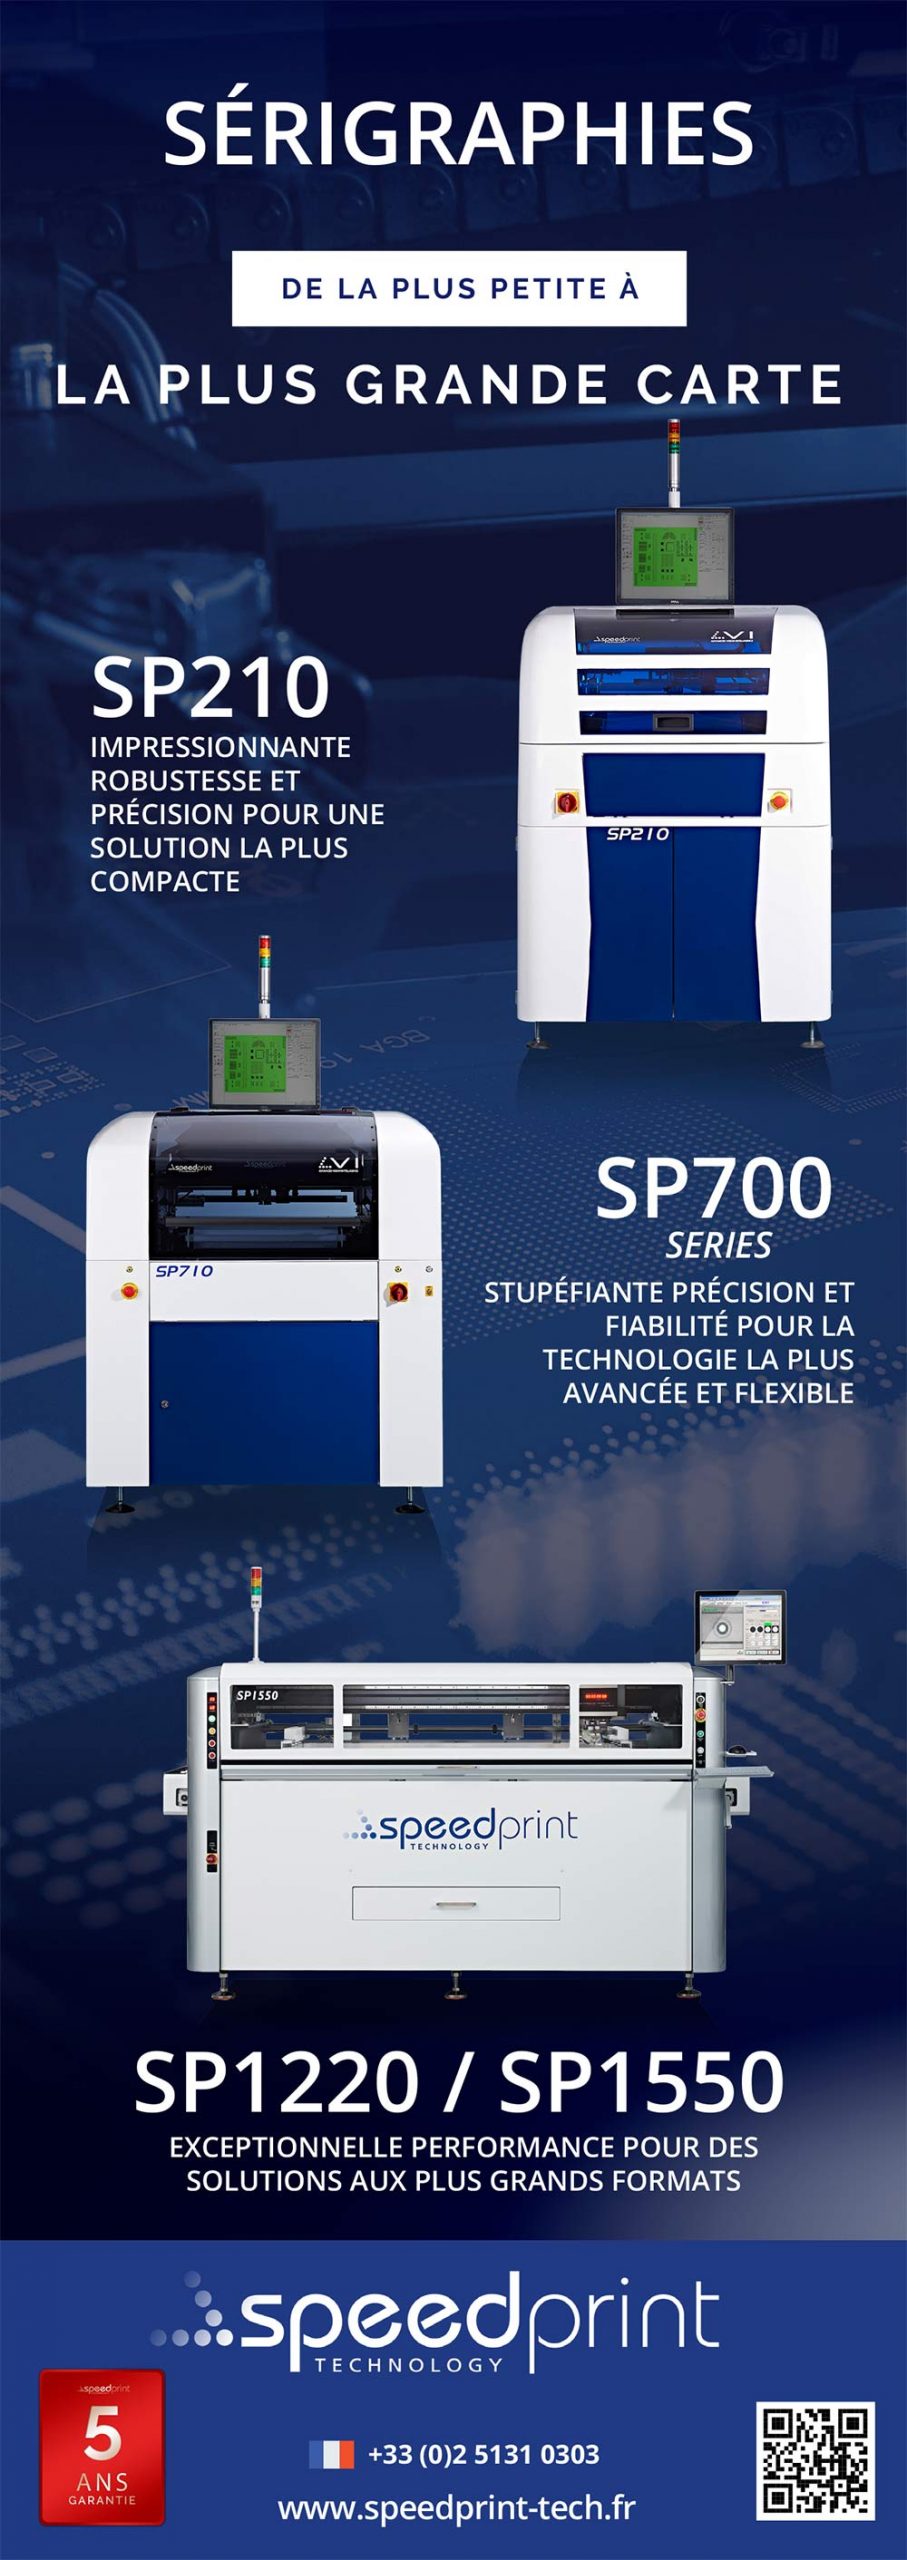 Speedprint product range advertisement in French language